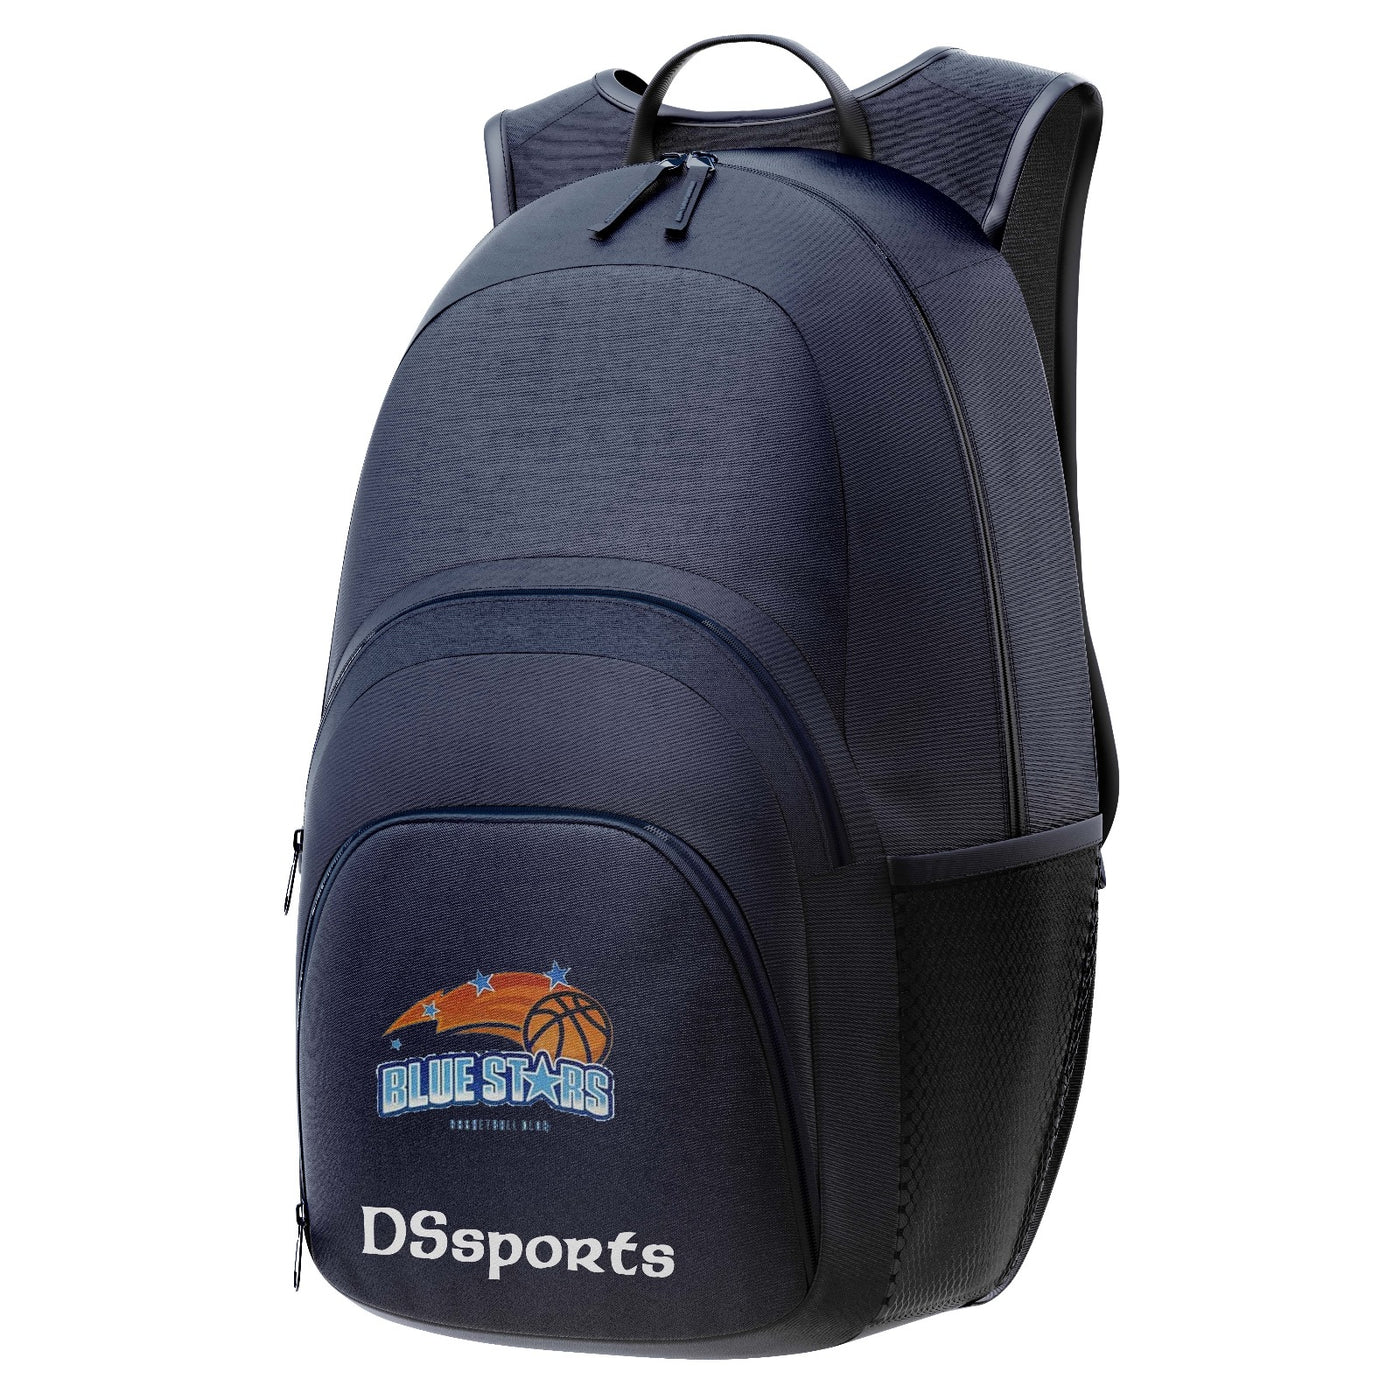 Ballyroan Bluestars- Backpack